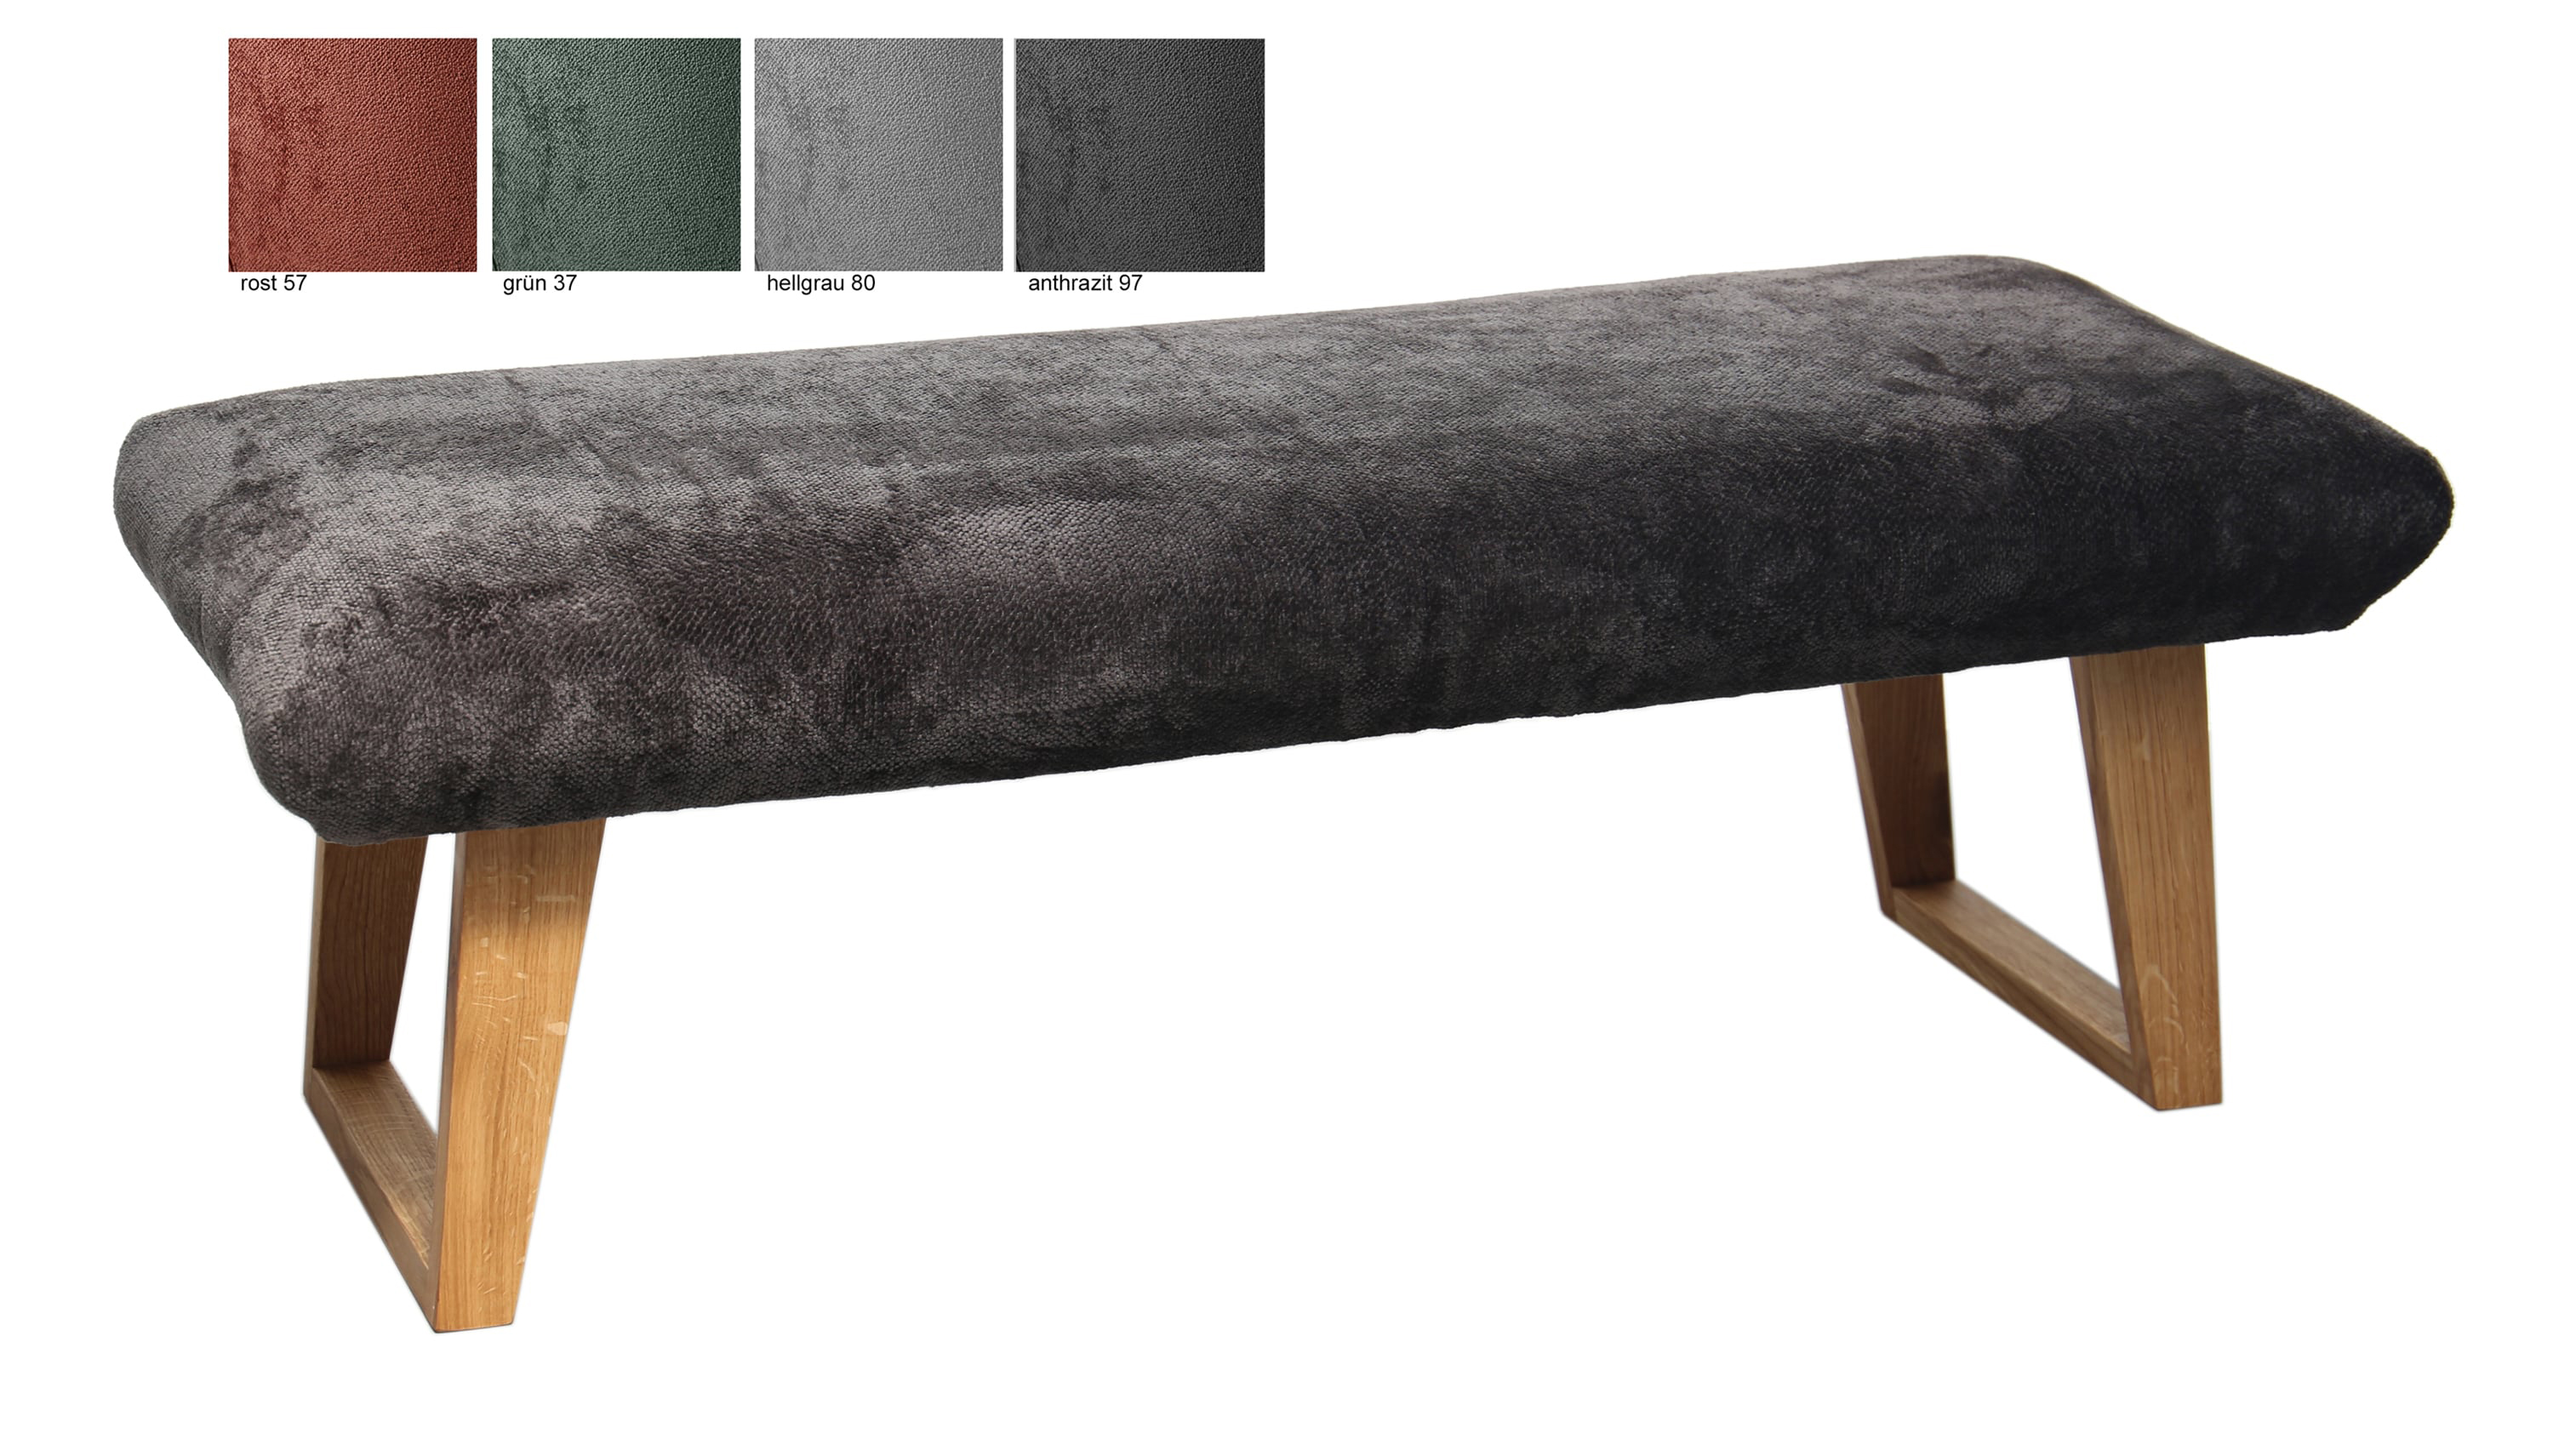 Standard Furniture Cortina Polsterbank massiv eiche rustikal mit Bezug anthrazit